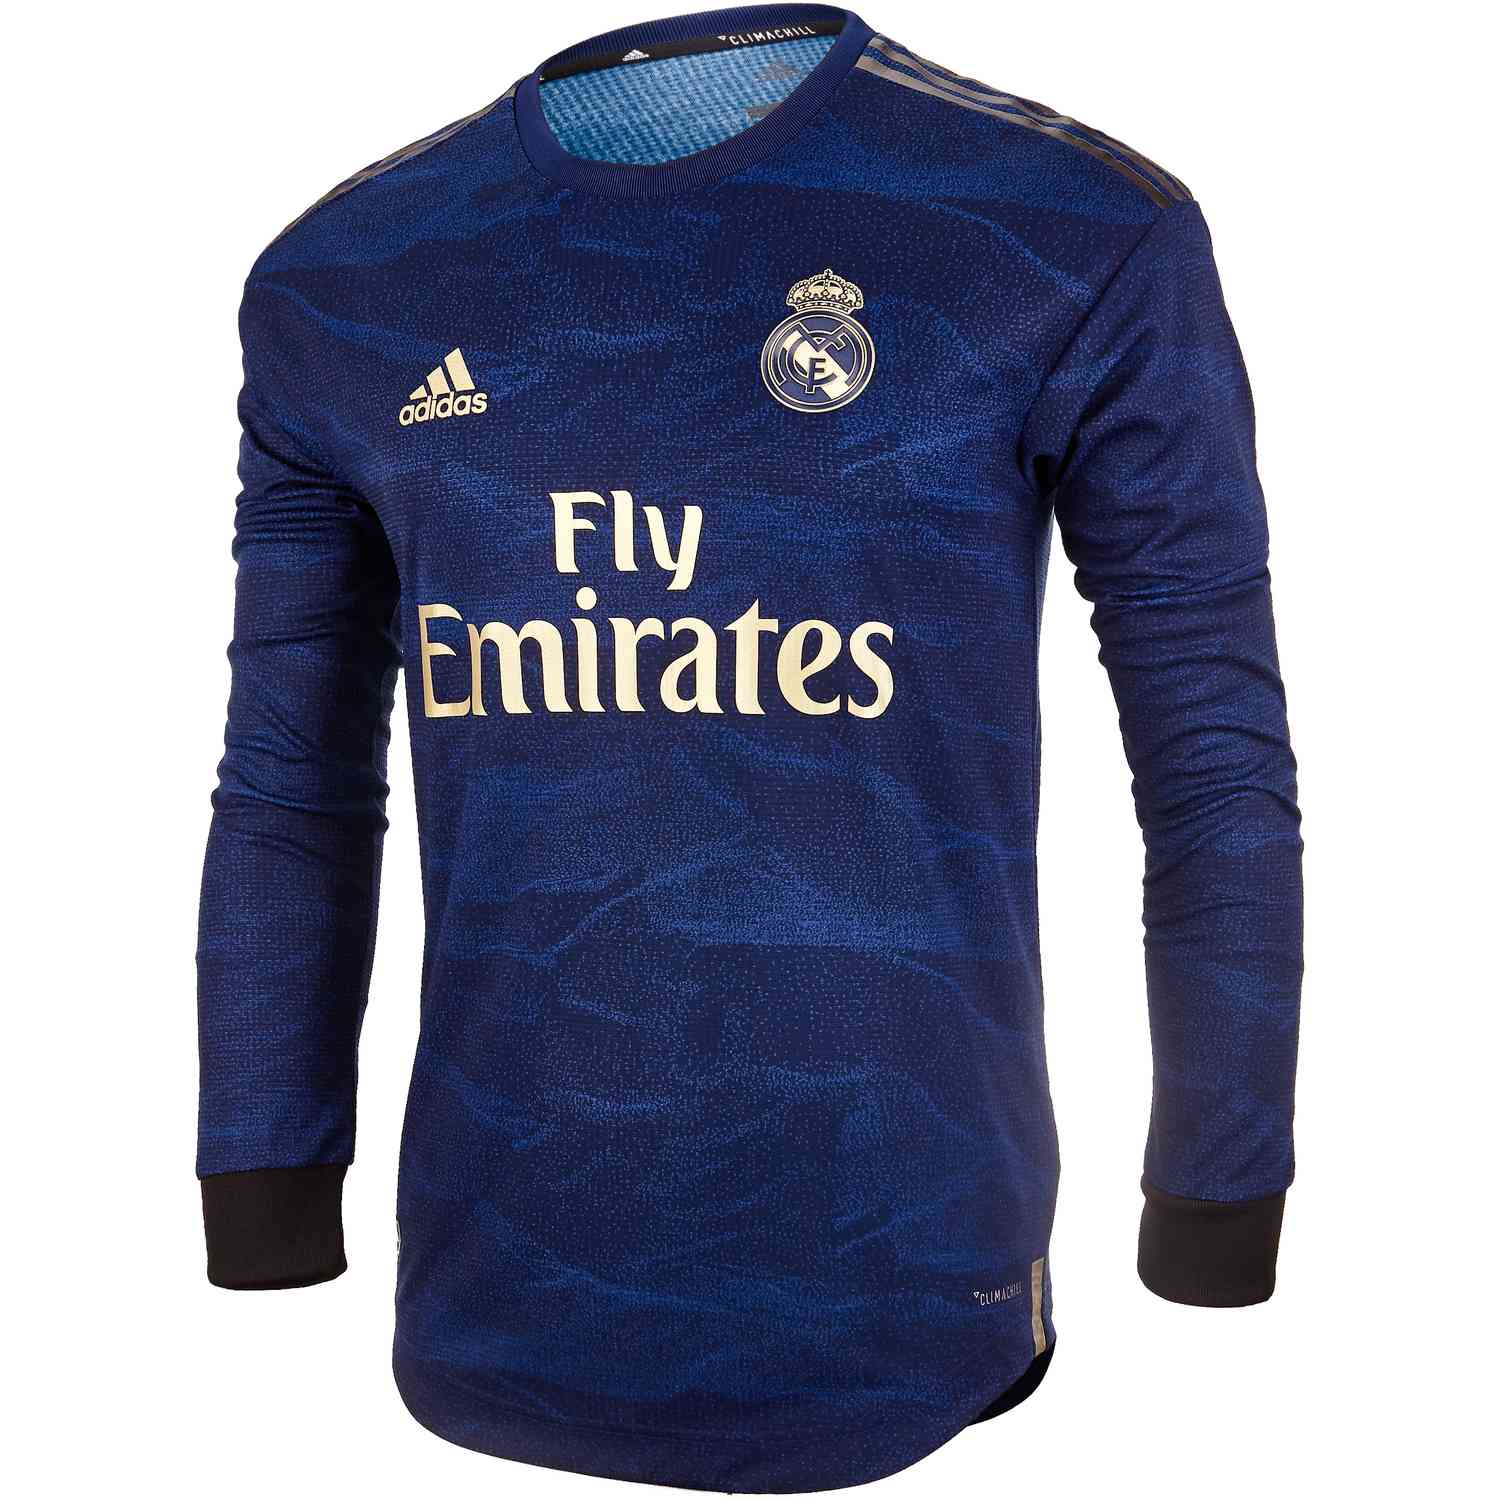 Adidas Real Madrid Jersey Size Chart